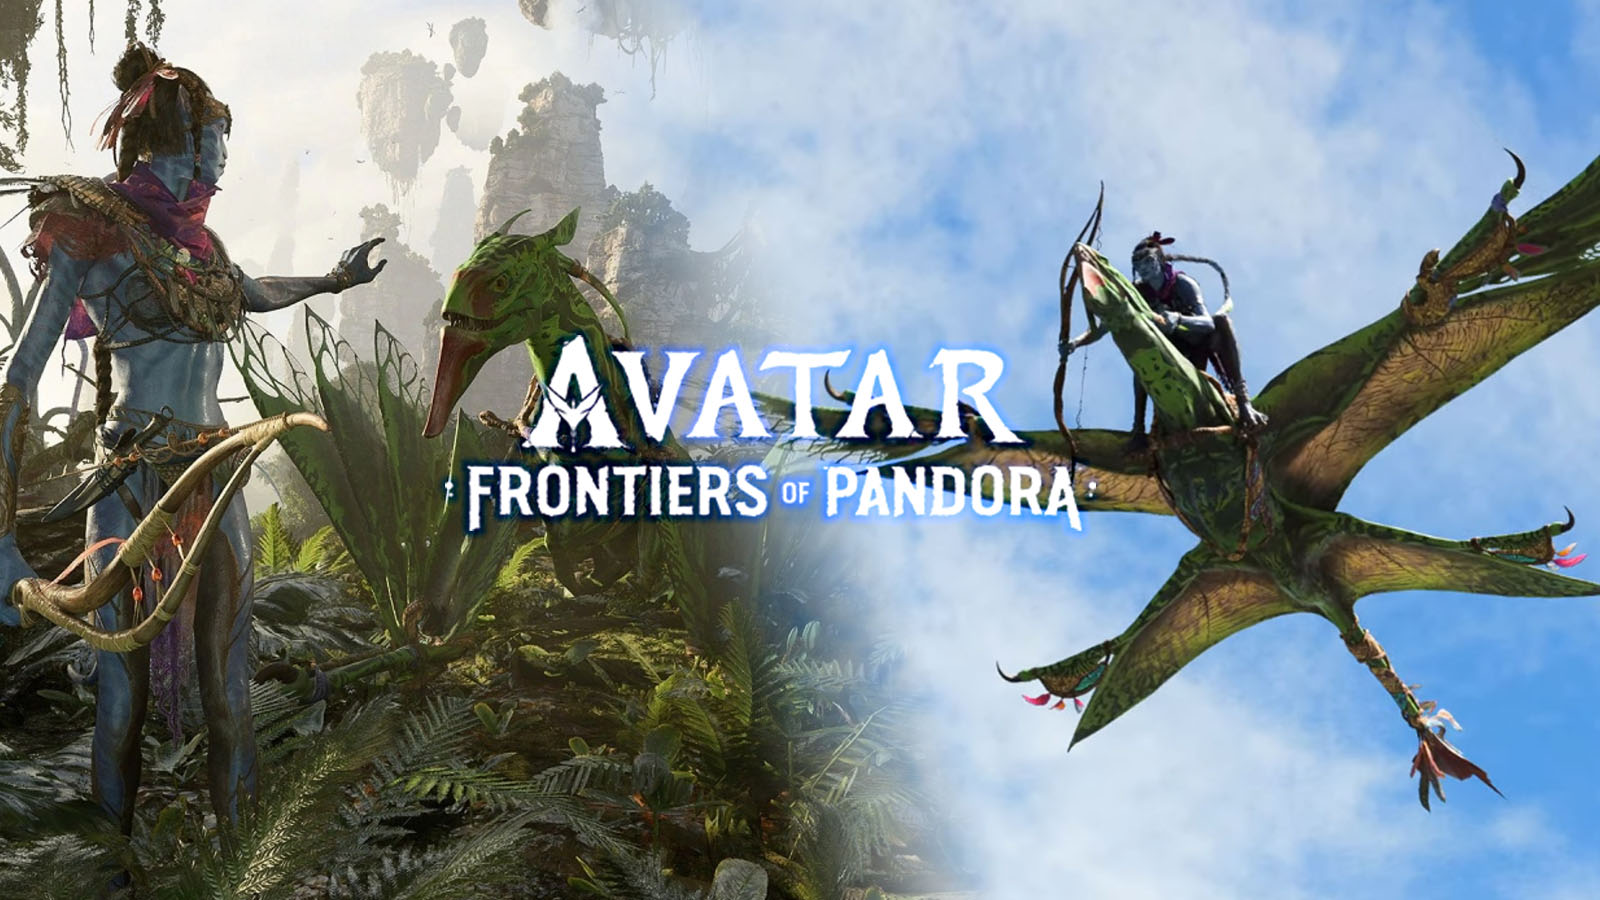 download avatar frontiers of pandora steam